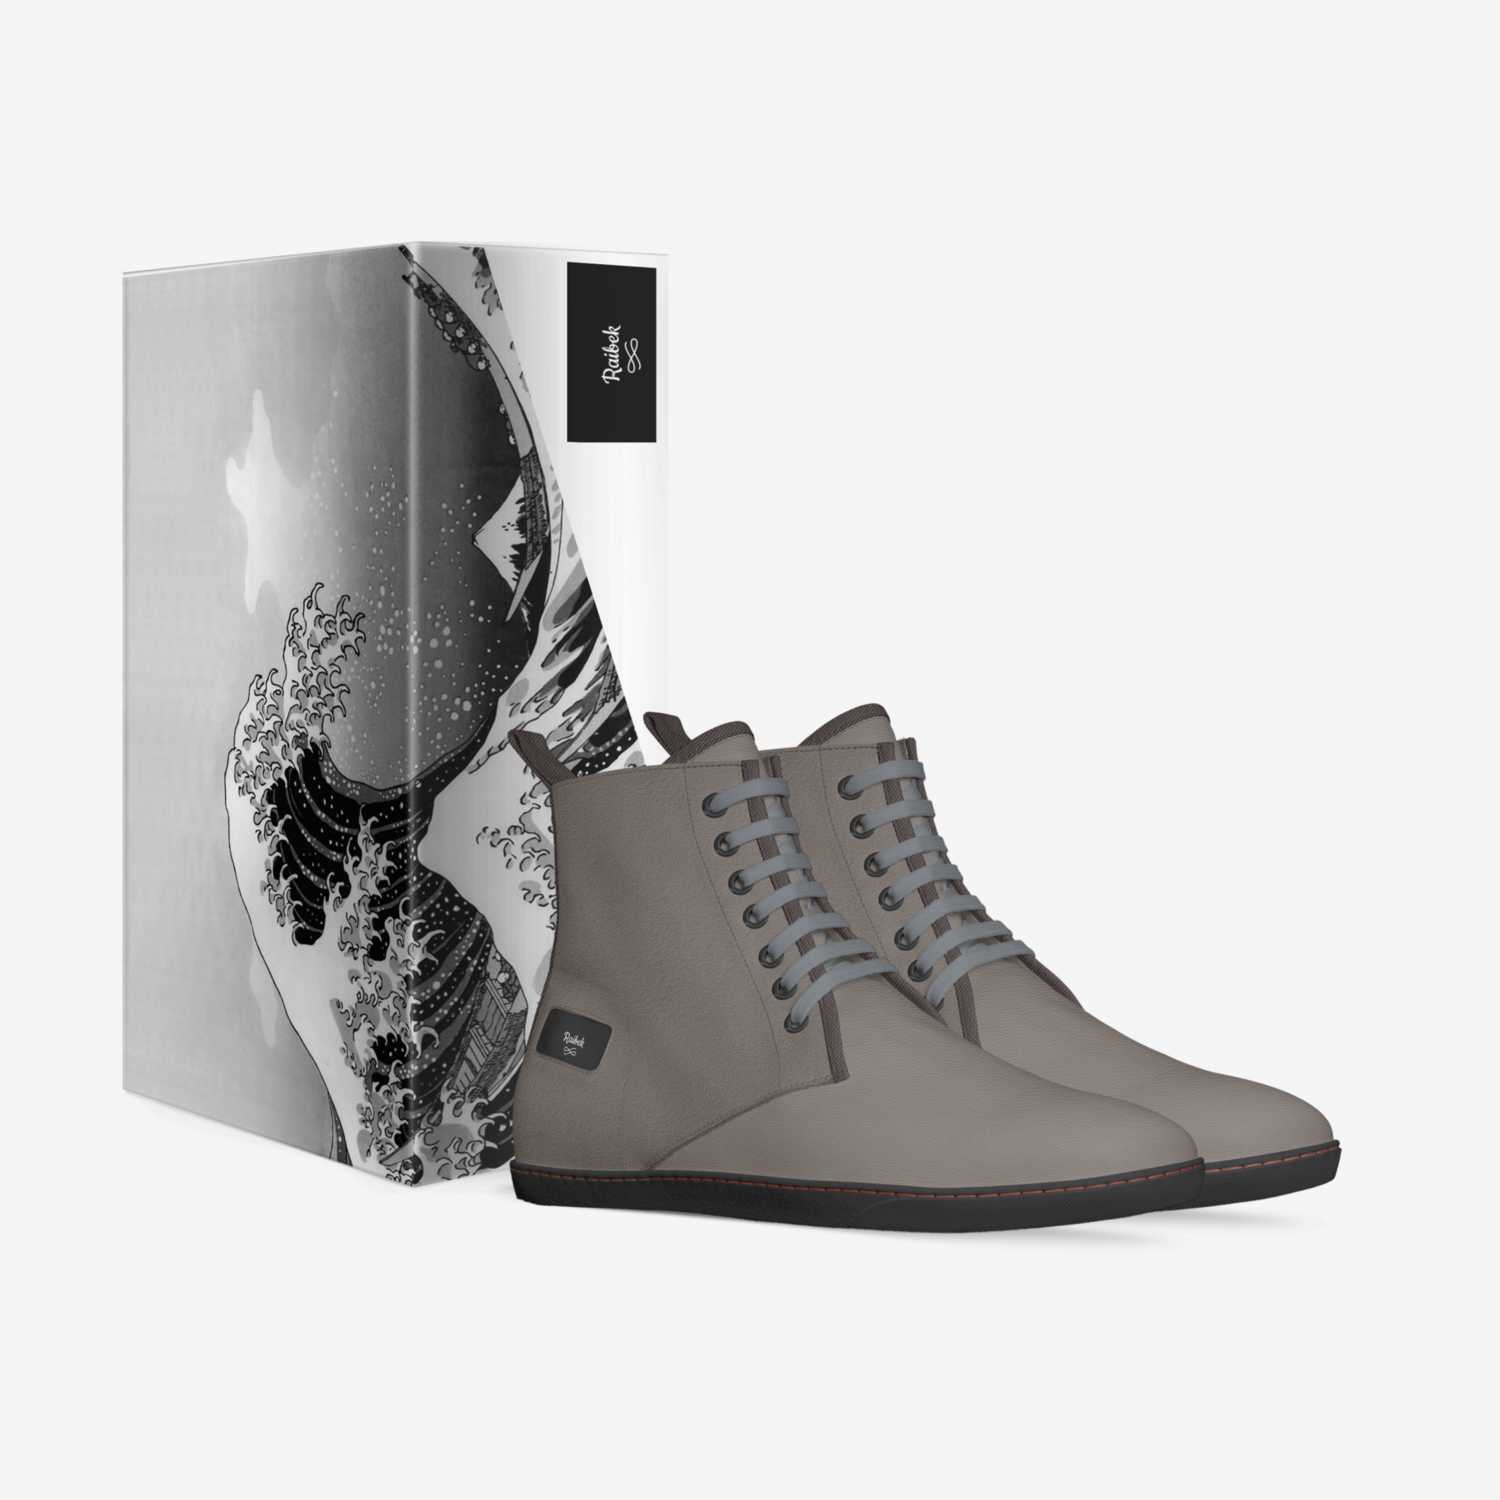 Raibek custom made in Italy shoes by Raibek Tussupbekov | Box view